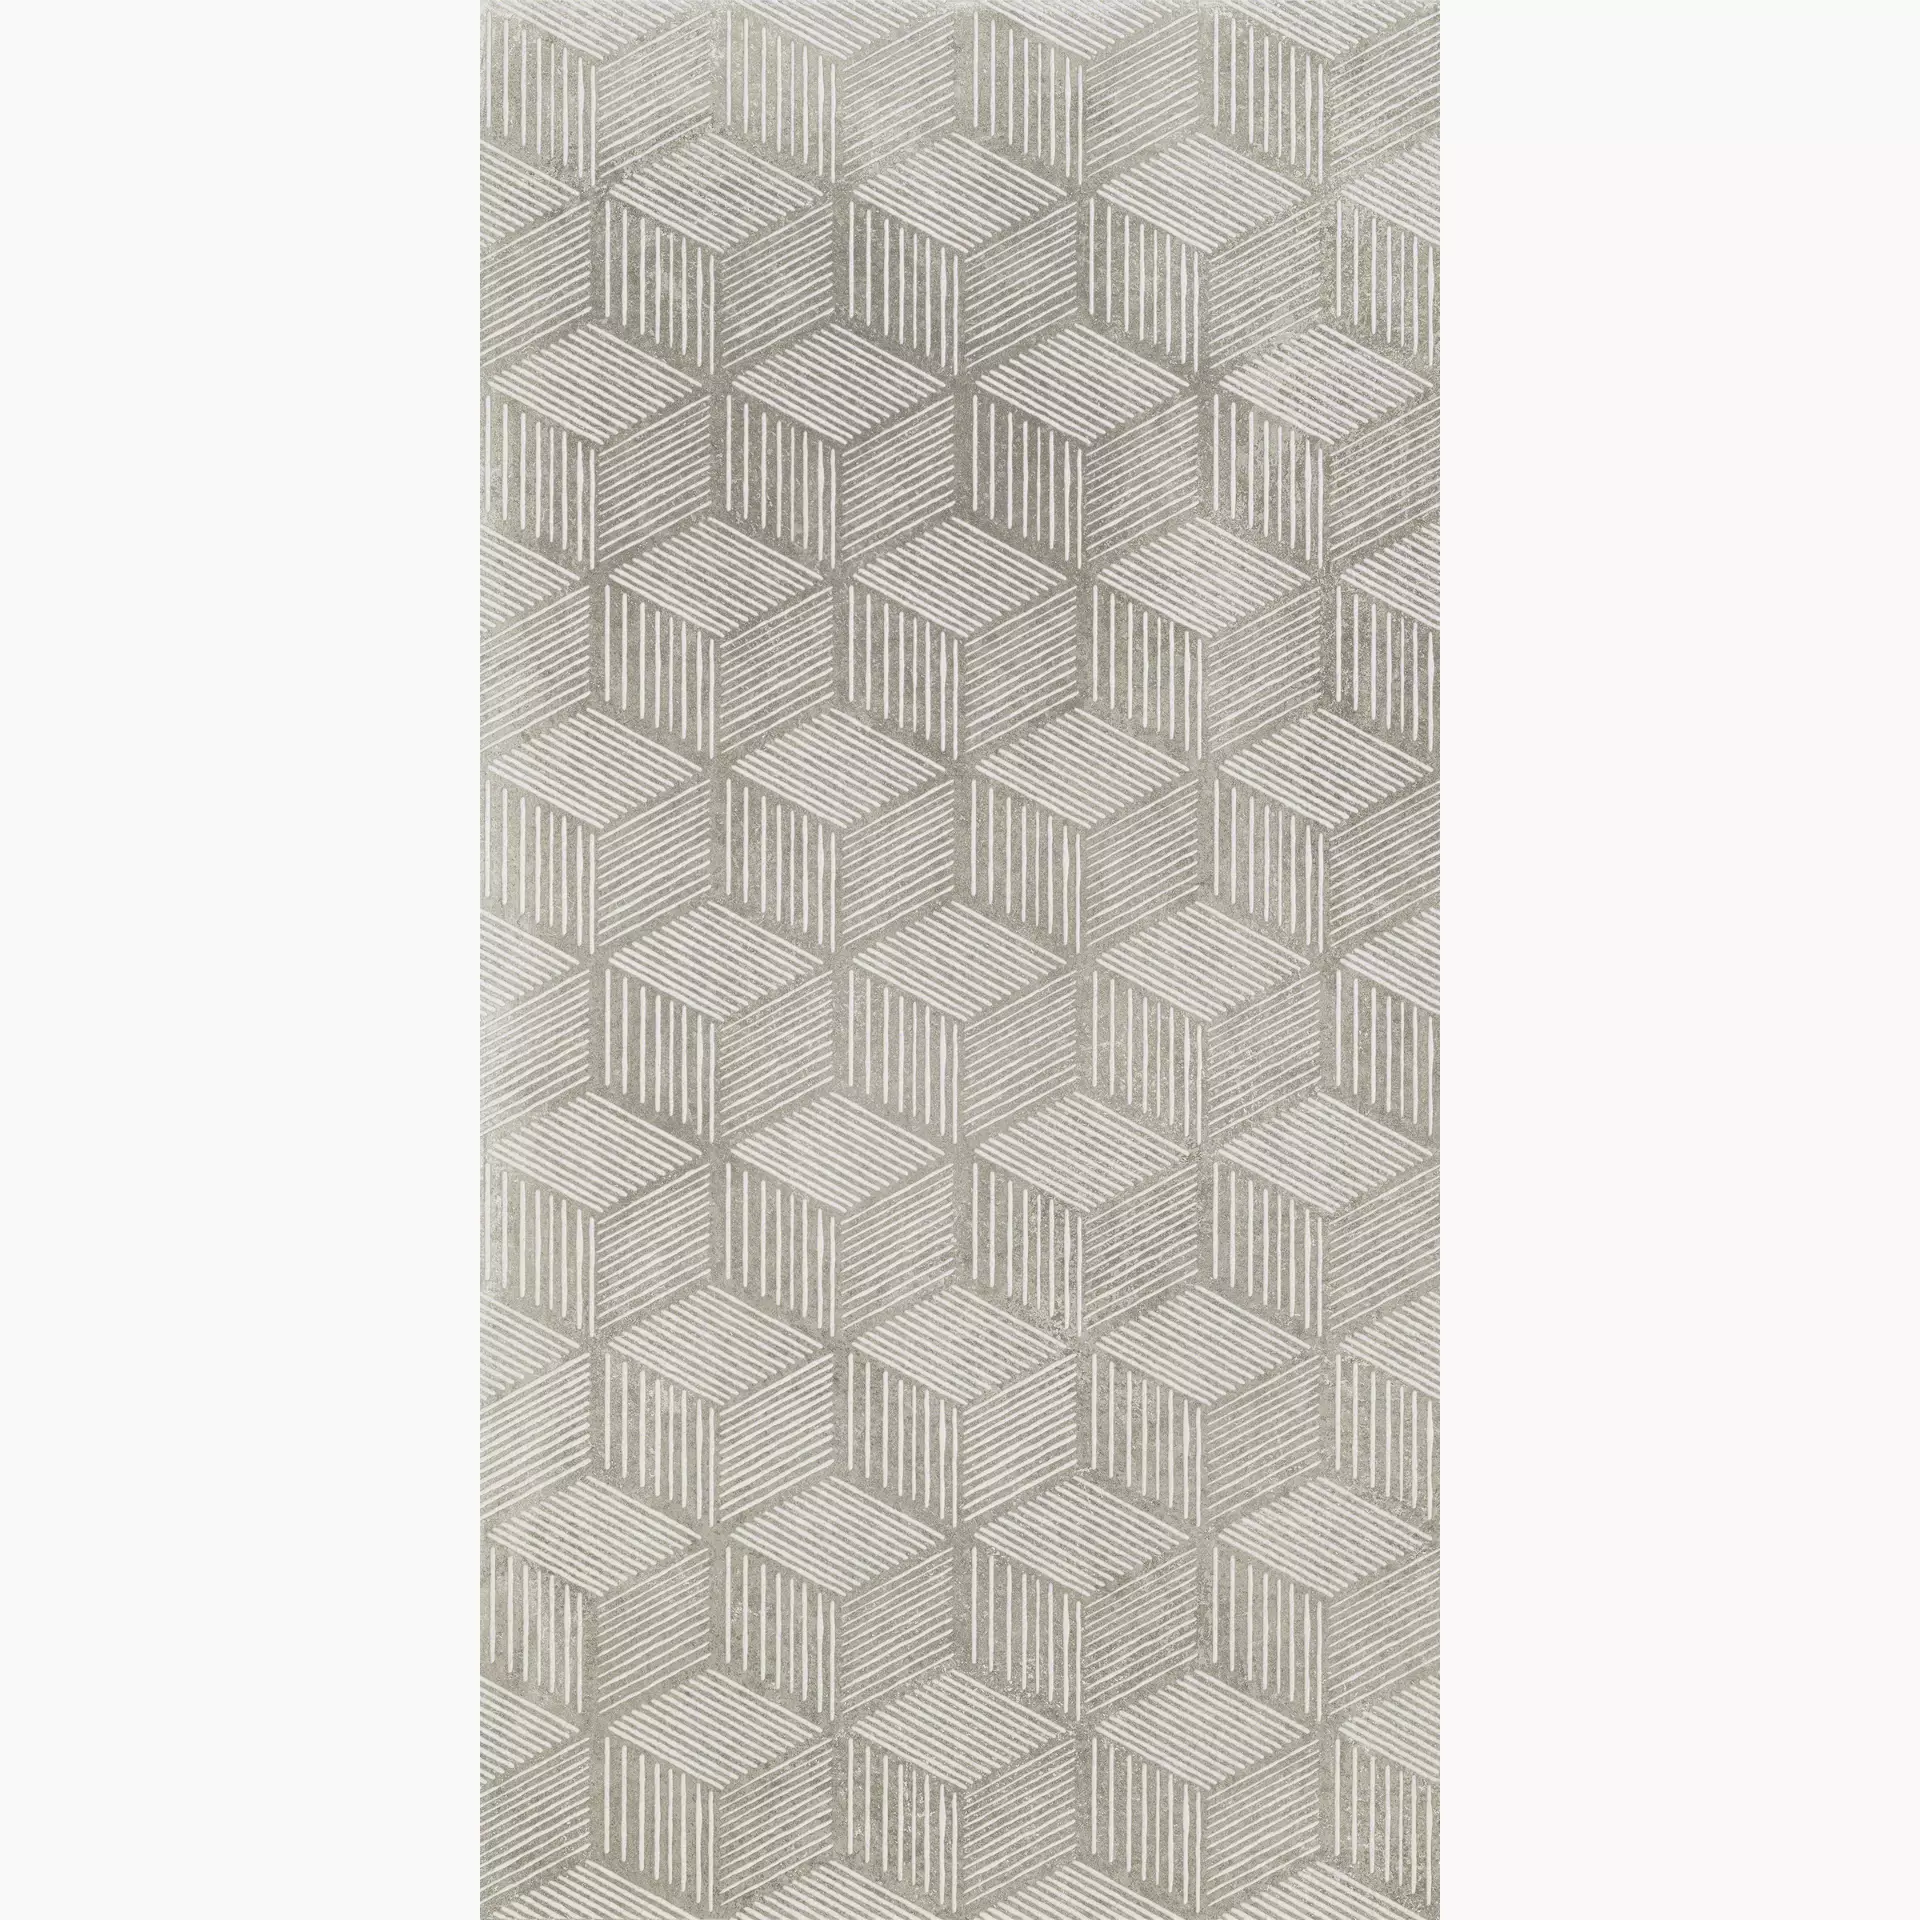 KRONOS Prima Materia Sandalo Naturale Hexagon 8209 60x120cm 9mm